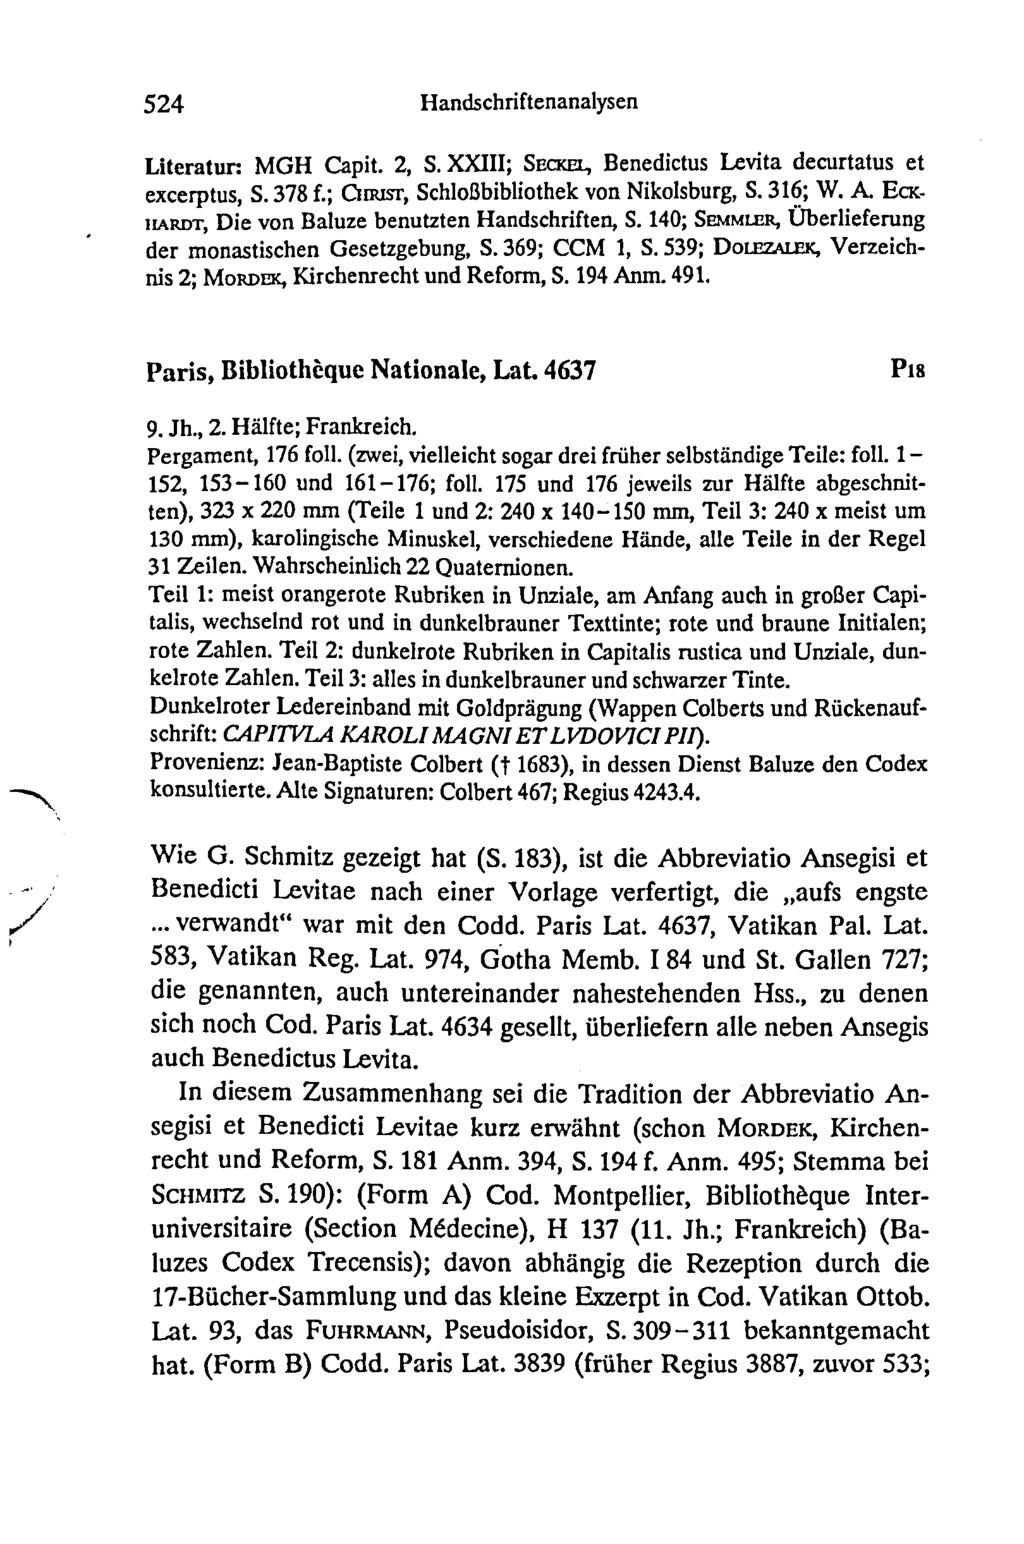 524 Handschriftenanalysen L ite ra tu n M G H Capit. 2, S. XXIII; S e c k e l, Benedictus Levita decurtatus et excerptus, S. 378 f.; C h r is t, Schloßbibliothek von Nikolsburg, S. 316; W. A.